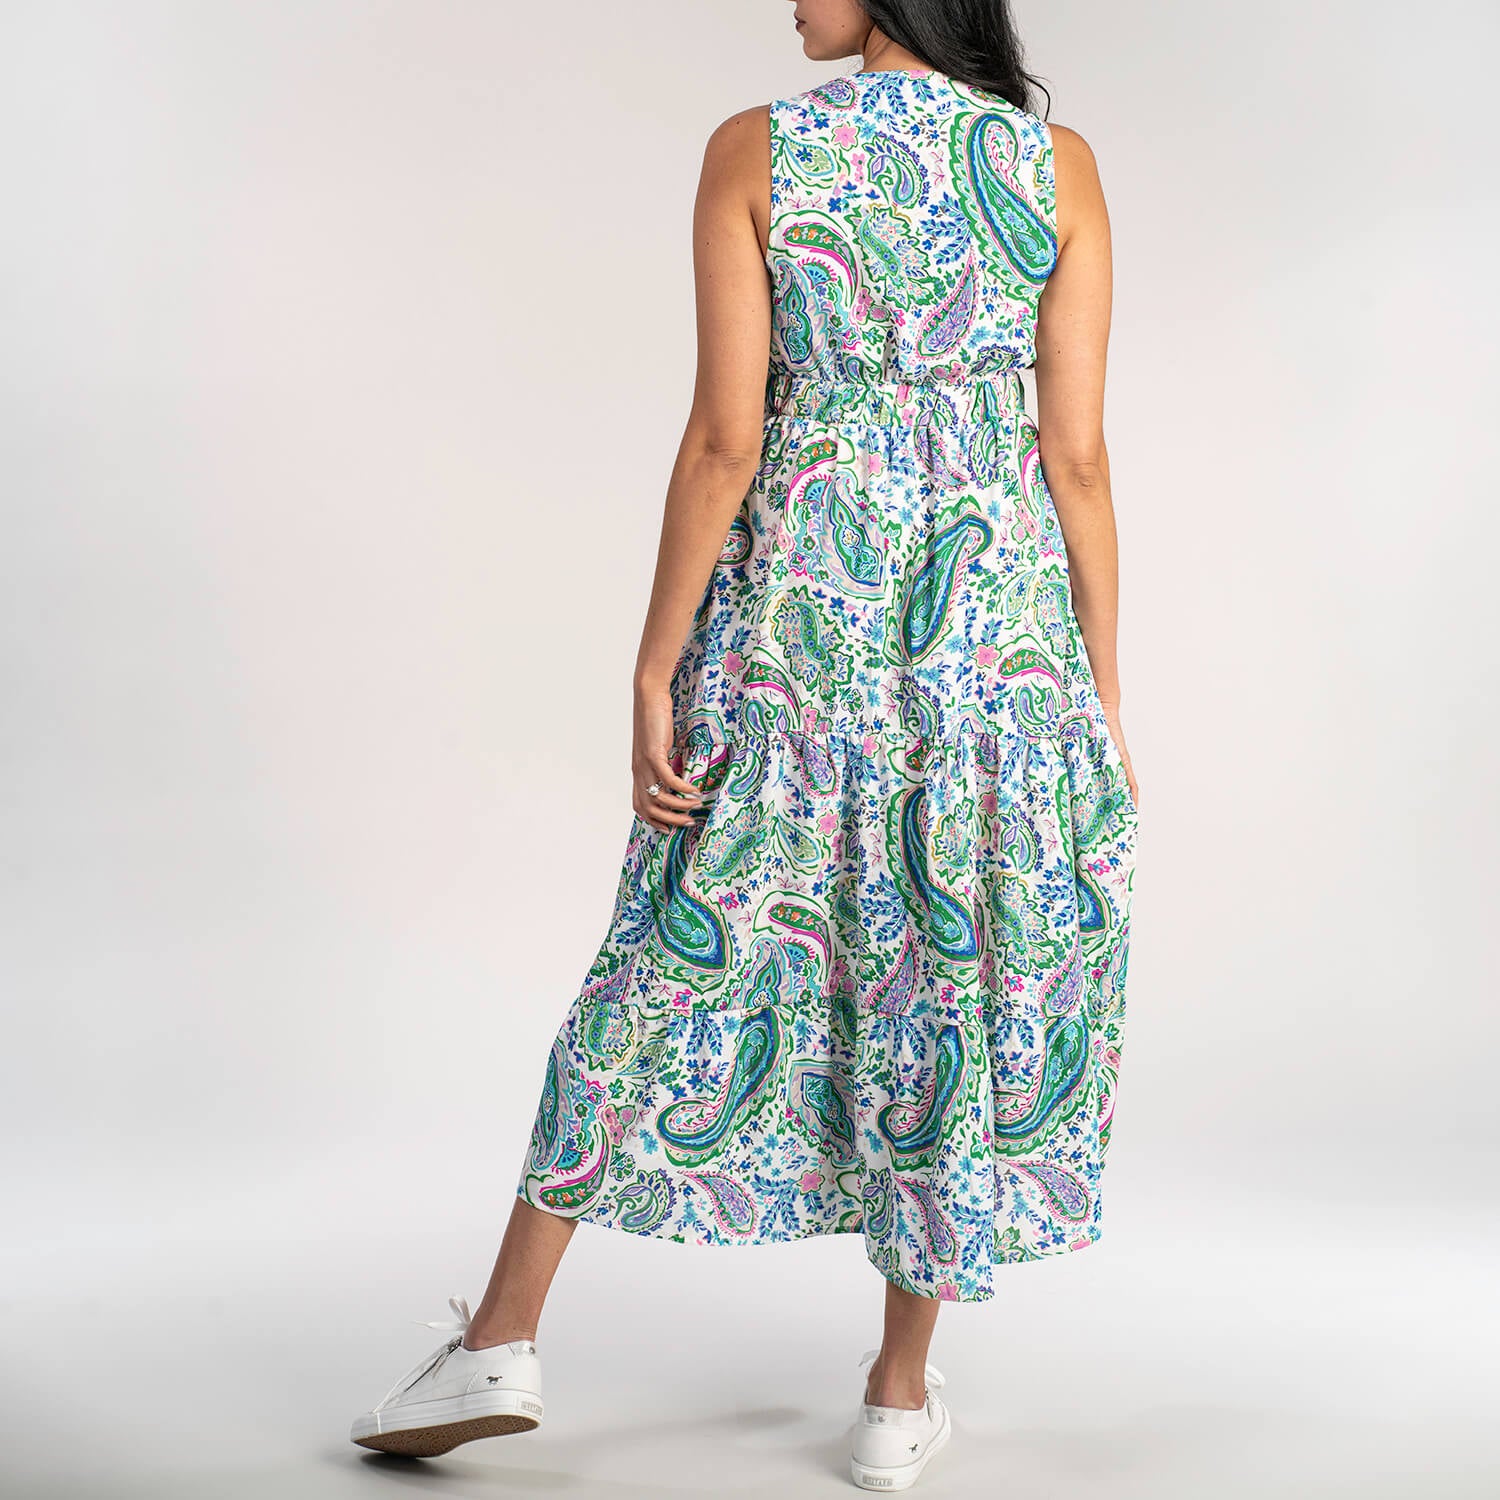 Naoise V Neck Sleeveless Dress - Green/Blue 5 Shaws Department Stores